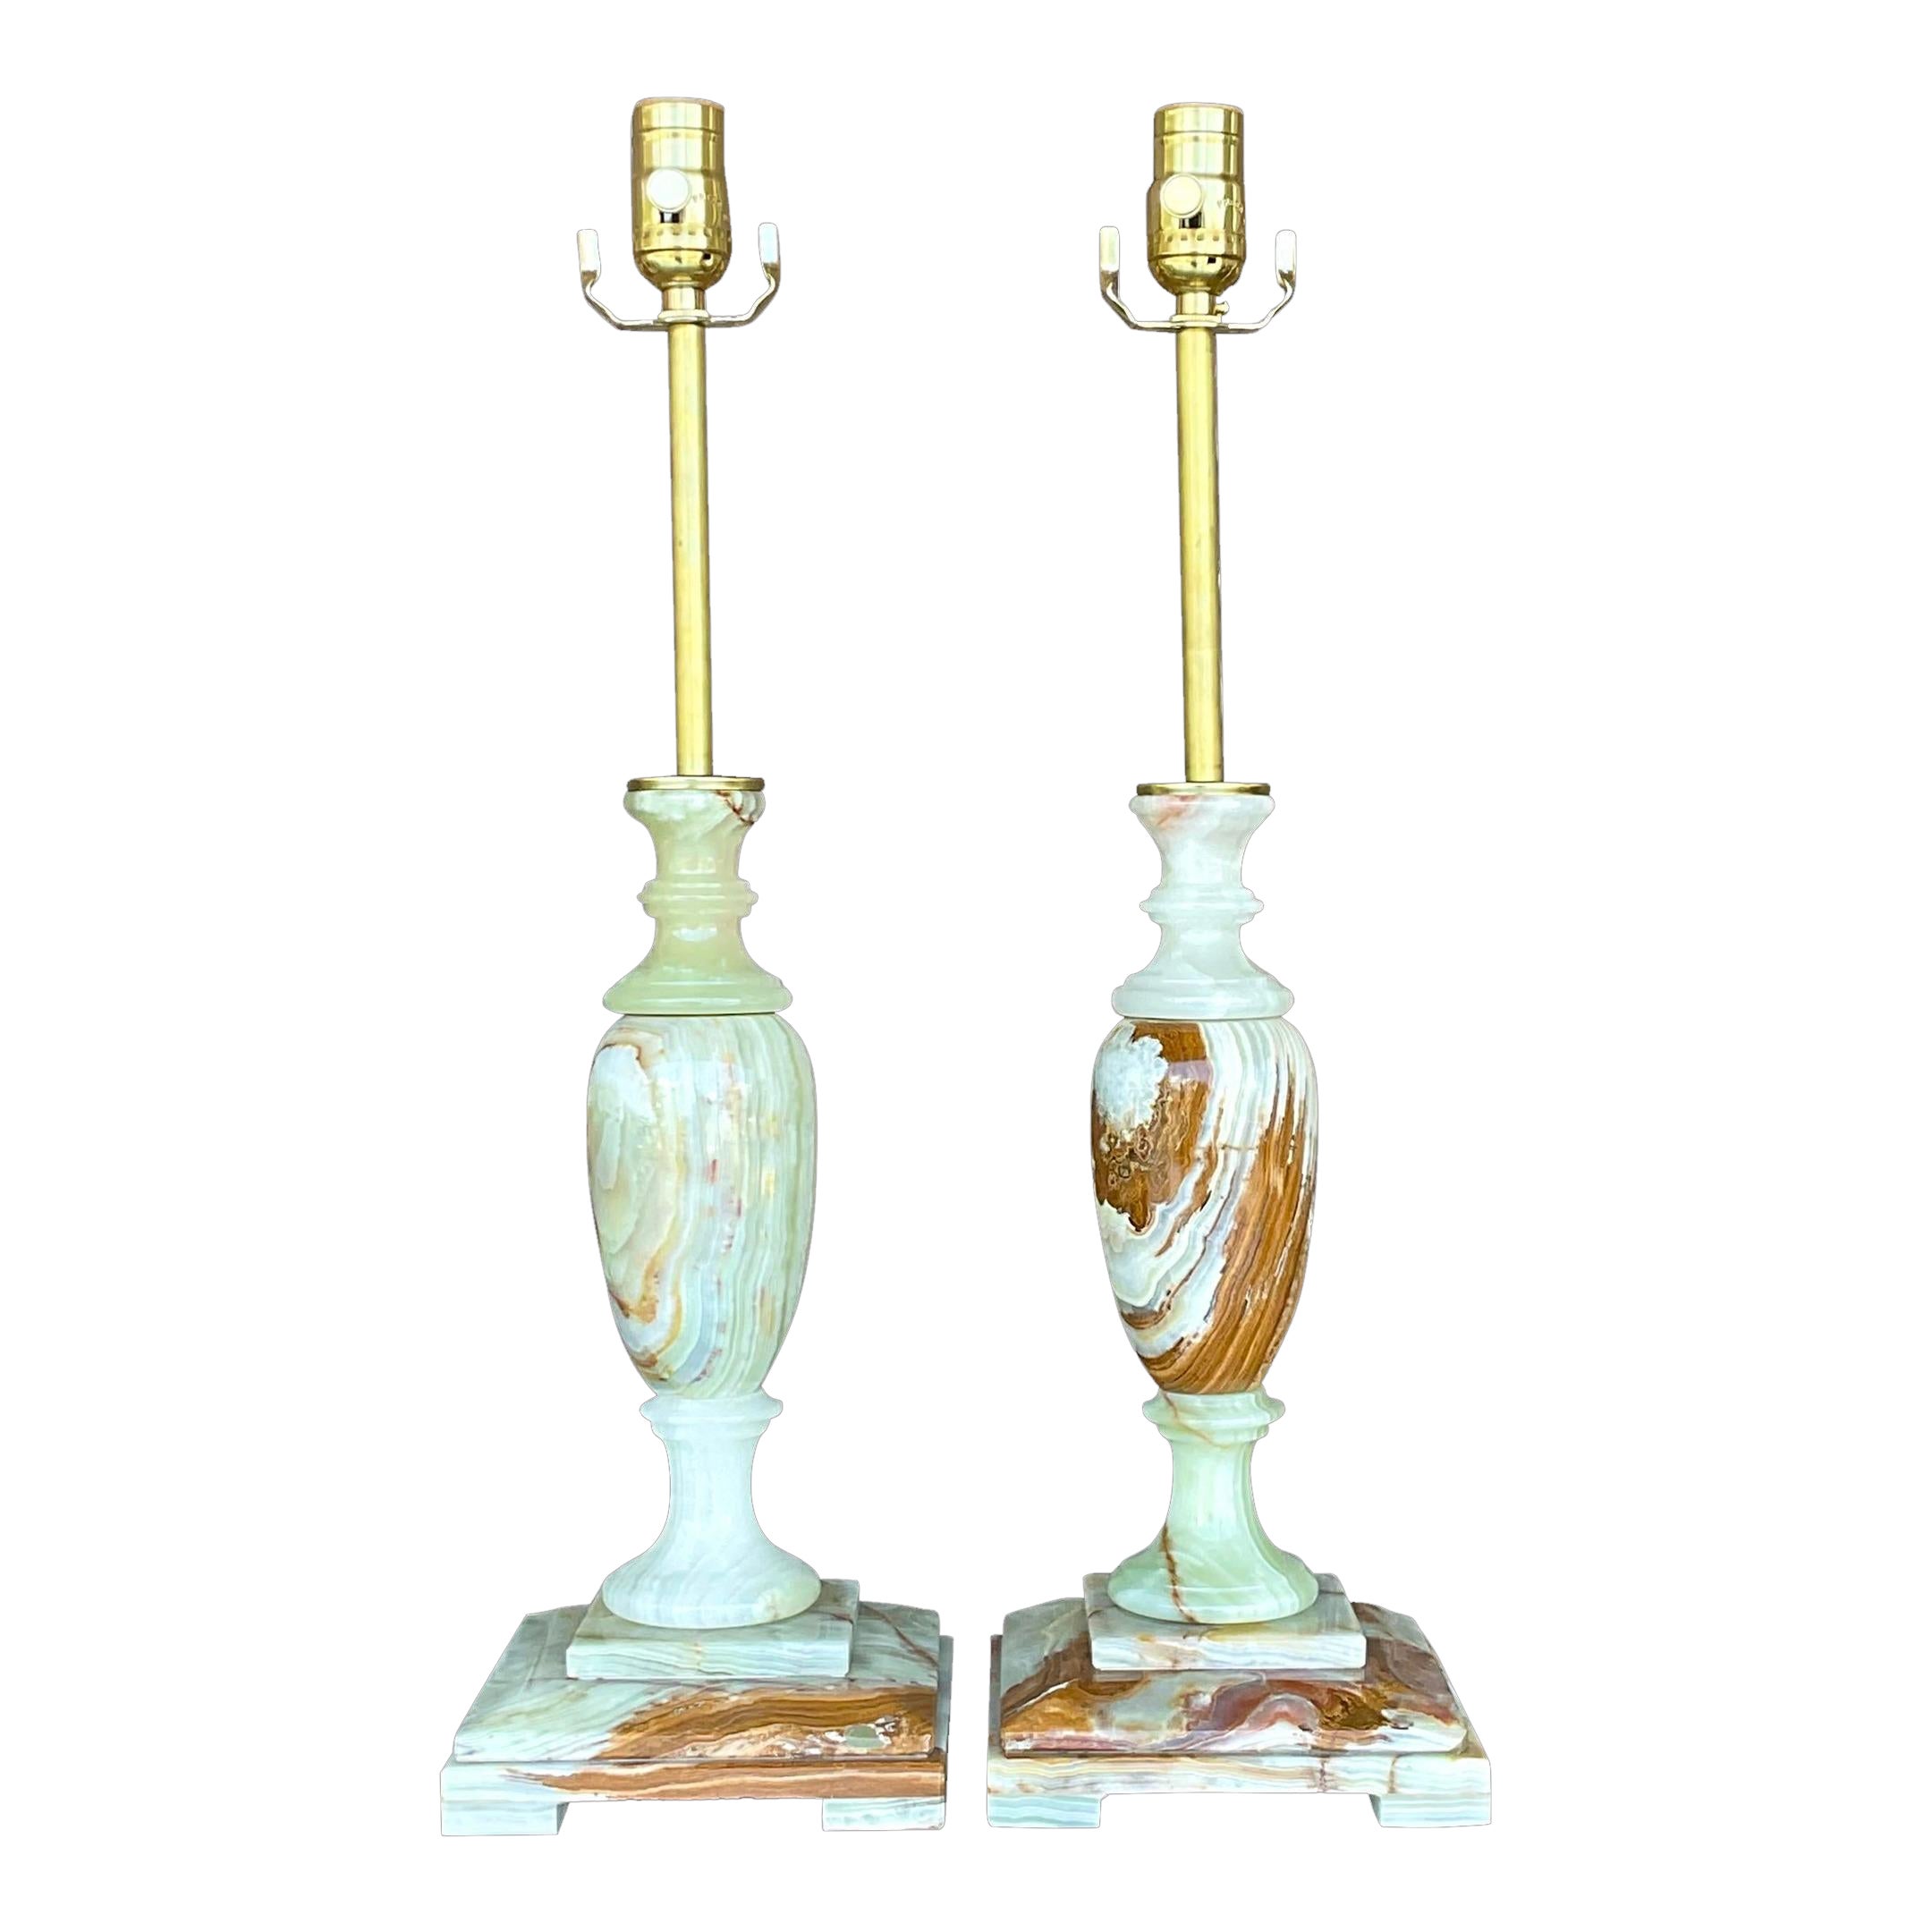 Vintage Regency Onyx Candlestick Lamps - a Pair For Sale